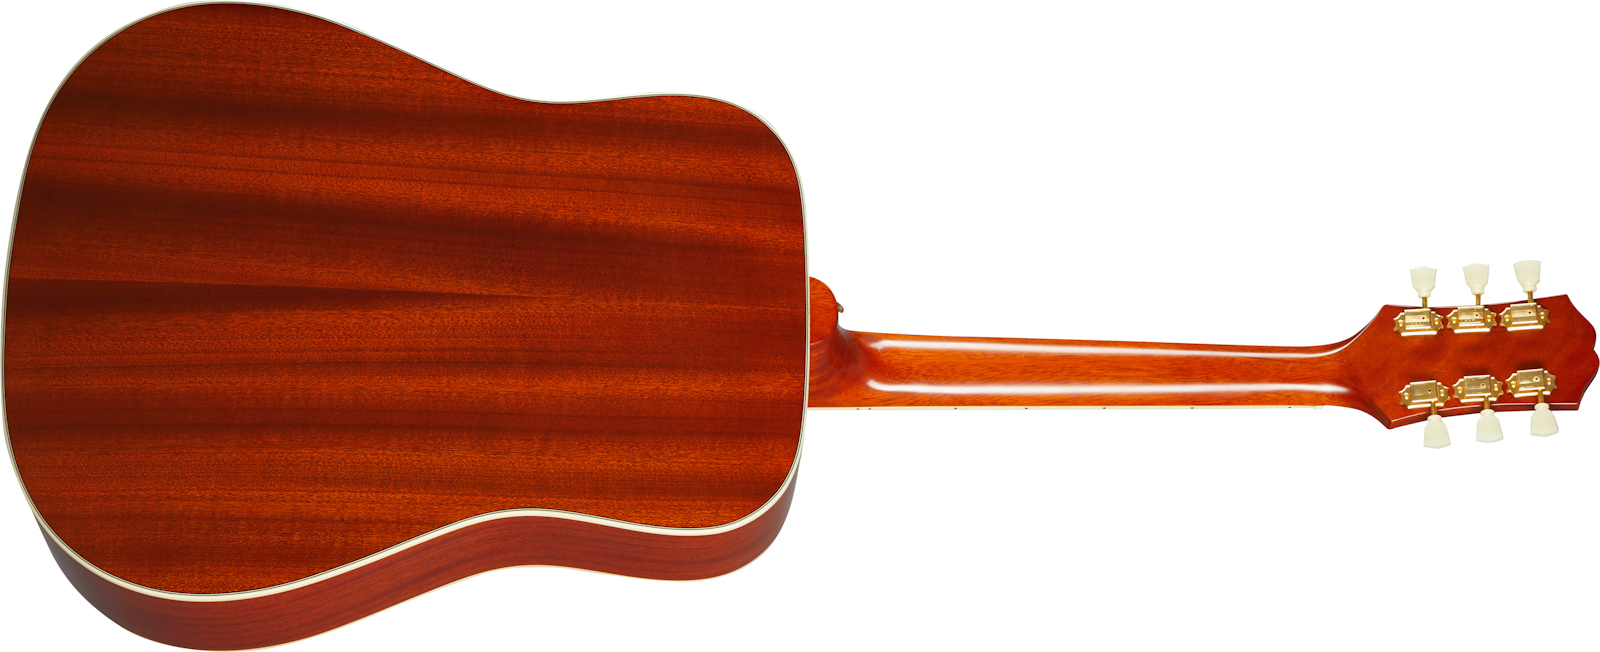 Epiphone Inspired by Gibson Hummingbird - aged cherry sunburst